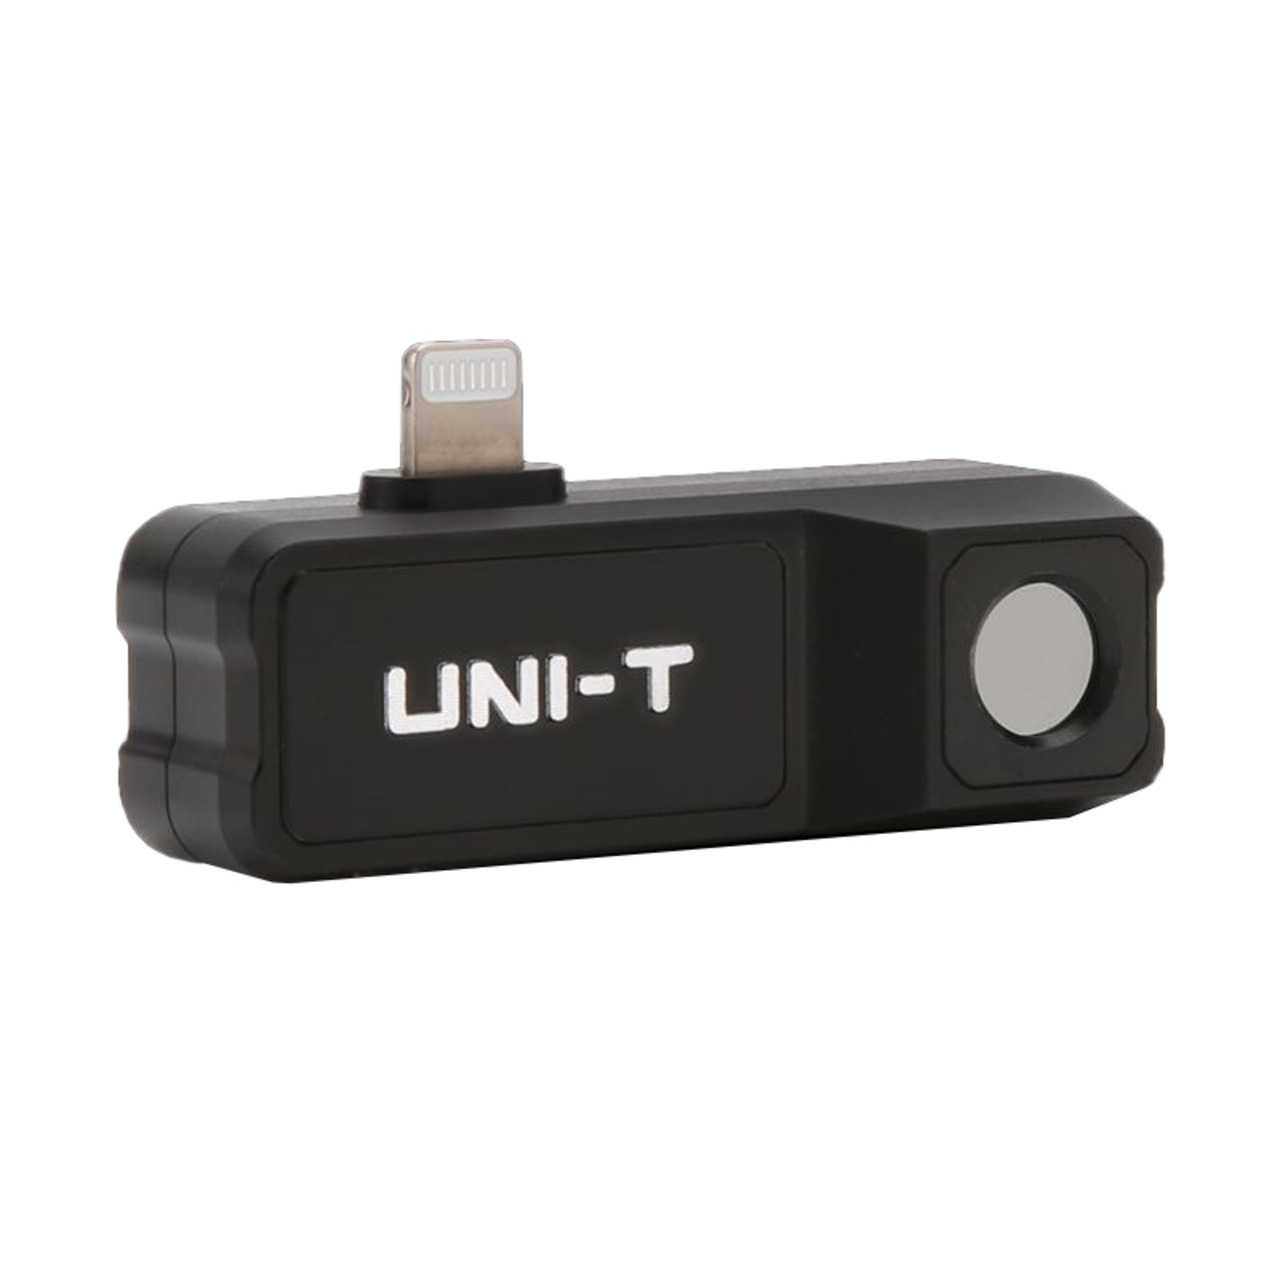 Uni-Trend Wrmebildkamera fr Apple iPhone UTi20MS - -20 bis +400 -C